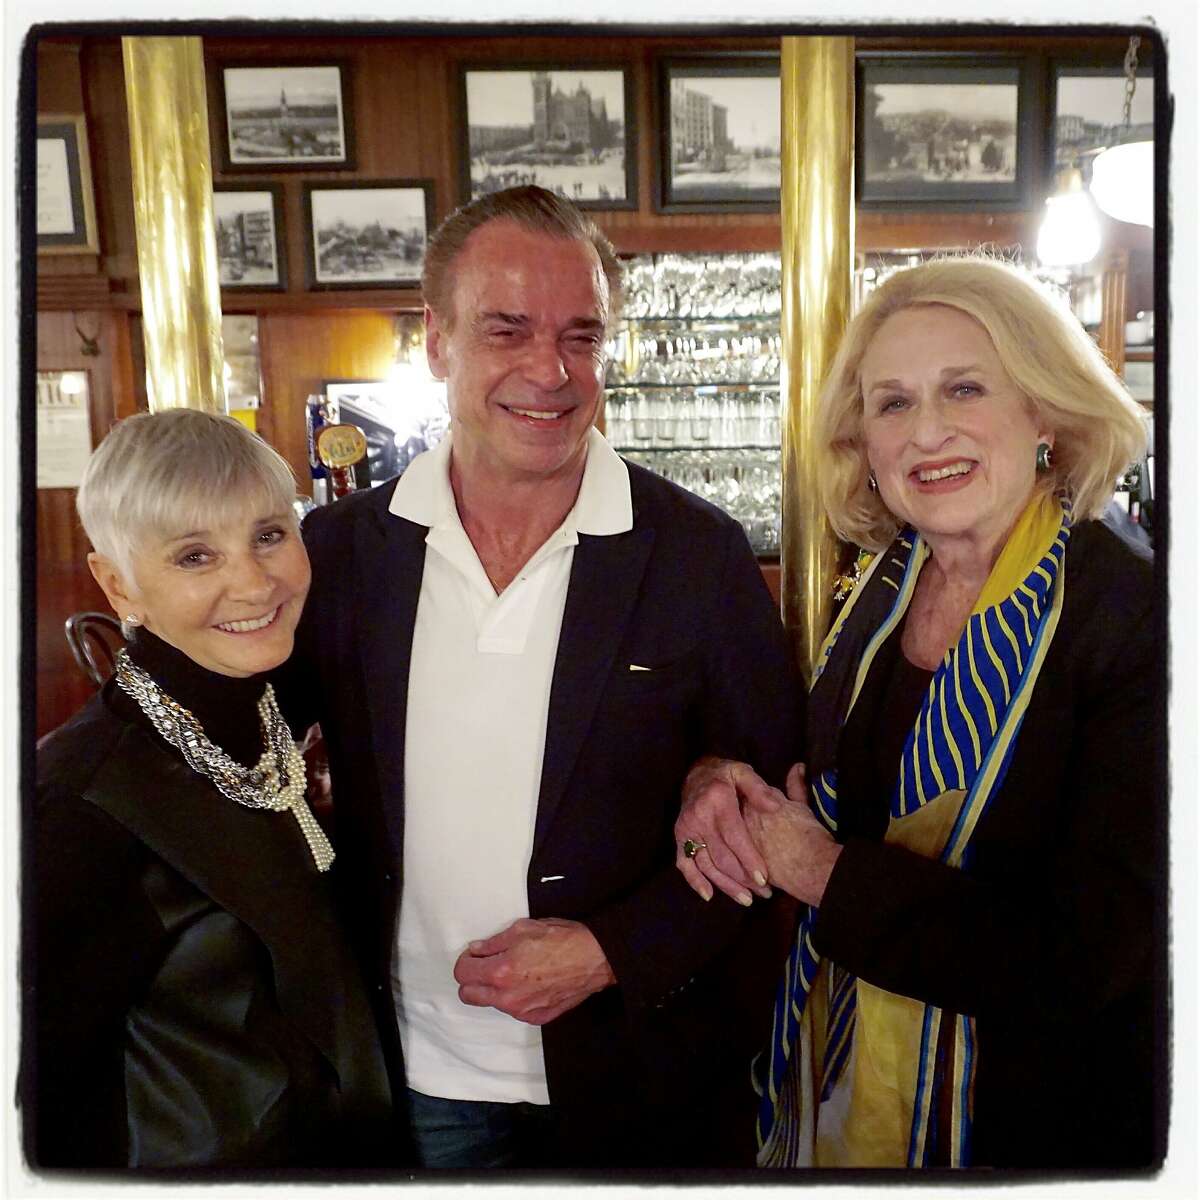 Gail Glasser (left) with Oscar de la Renta exec-at-large Boaz Mazor and Sally Debenham at John's Grill.